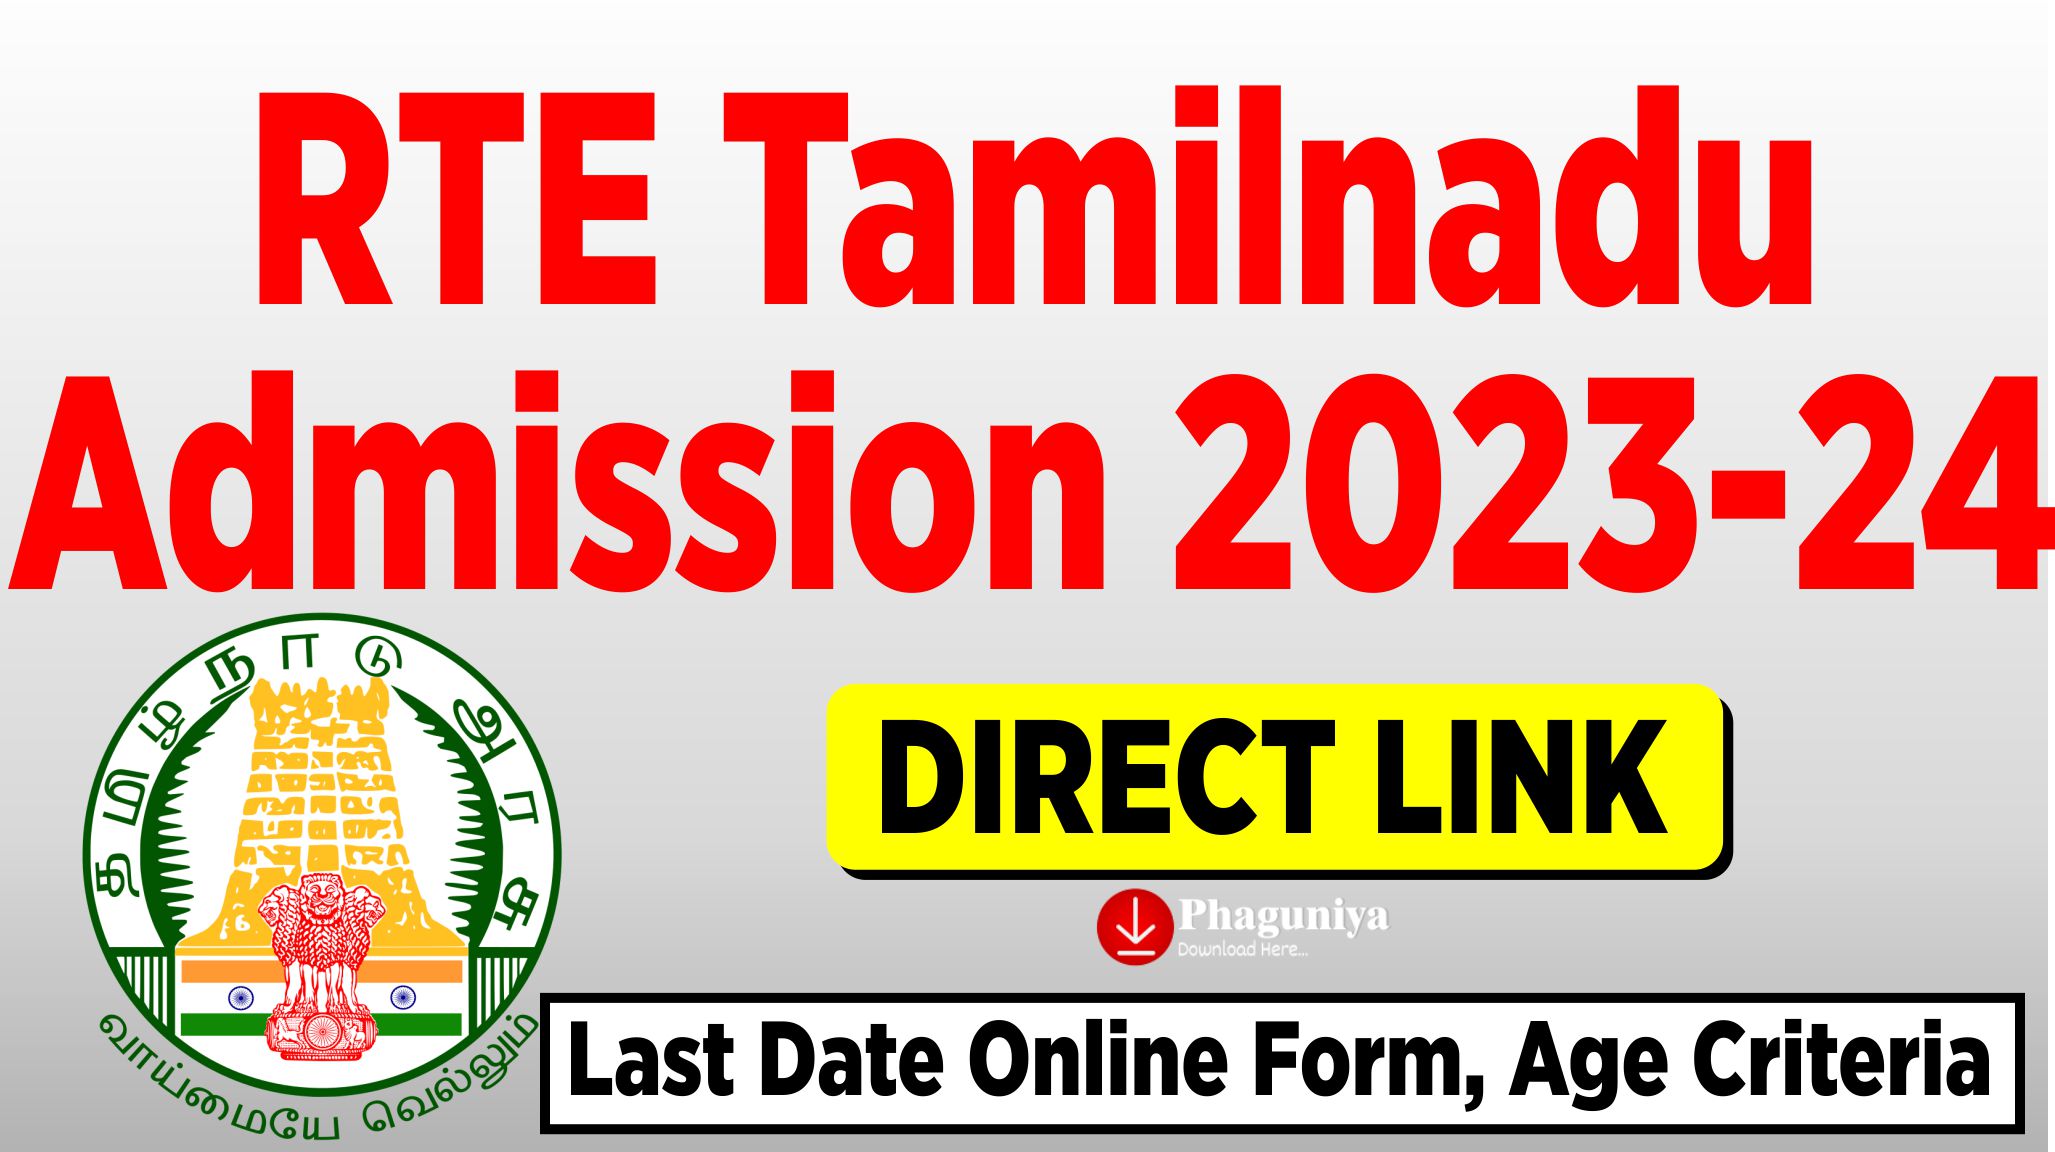 RTE Tamilnadu Admission, www.rte.tnschools.gov.in admission 2023, rte admission 2023-24 tamil nadu last date, rte tamilnadu admission 2023-24 age limit, rte apply online 2023-24, rte 2023-24 application date, www.rte.tnschools.gov.in admission 2023 age limit, rte.tnschools.gov.in online application, rte age limit for lkg 2023-24, rte apply online 2023-24, rte tamilnadu admission 2023-24, rte online application, rte tamilnadu admission 2023-24 age limit, www.rte.tnschools.gov.in admission 2023, rte.tnschools.gov.in online application, rte application form, rte admission 2023-24 tamil nadu last date,